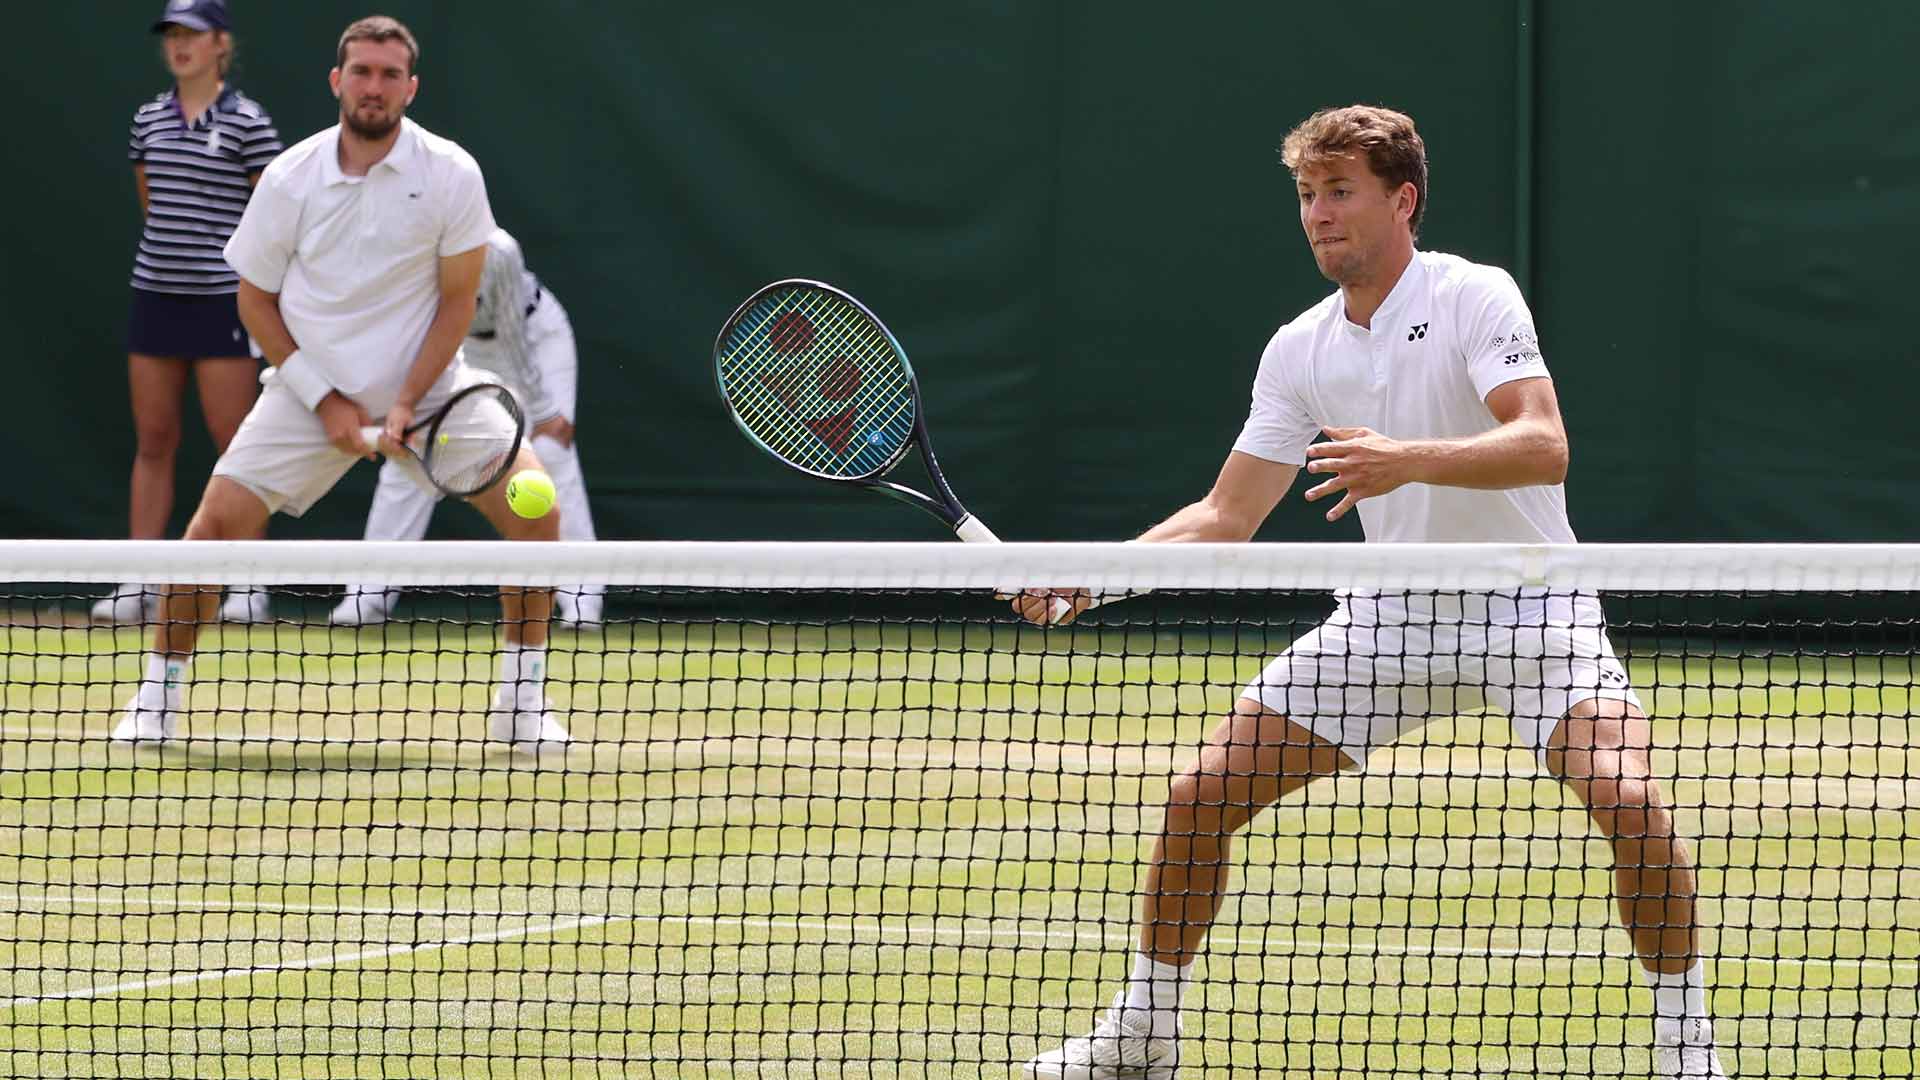 Blumberg & Ruud: A friendship & doubles tandem at Wimbledon